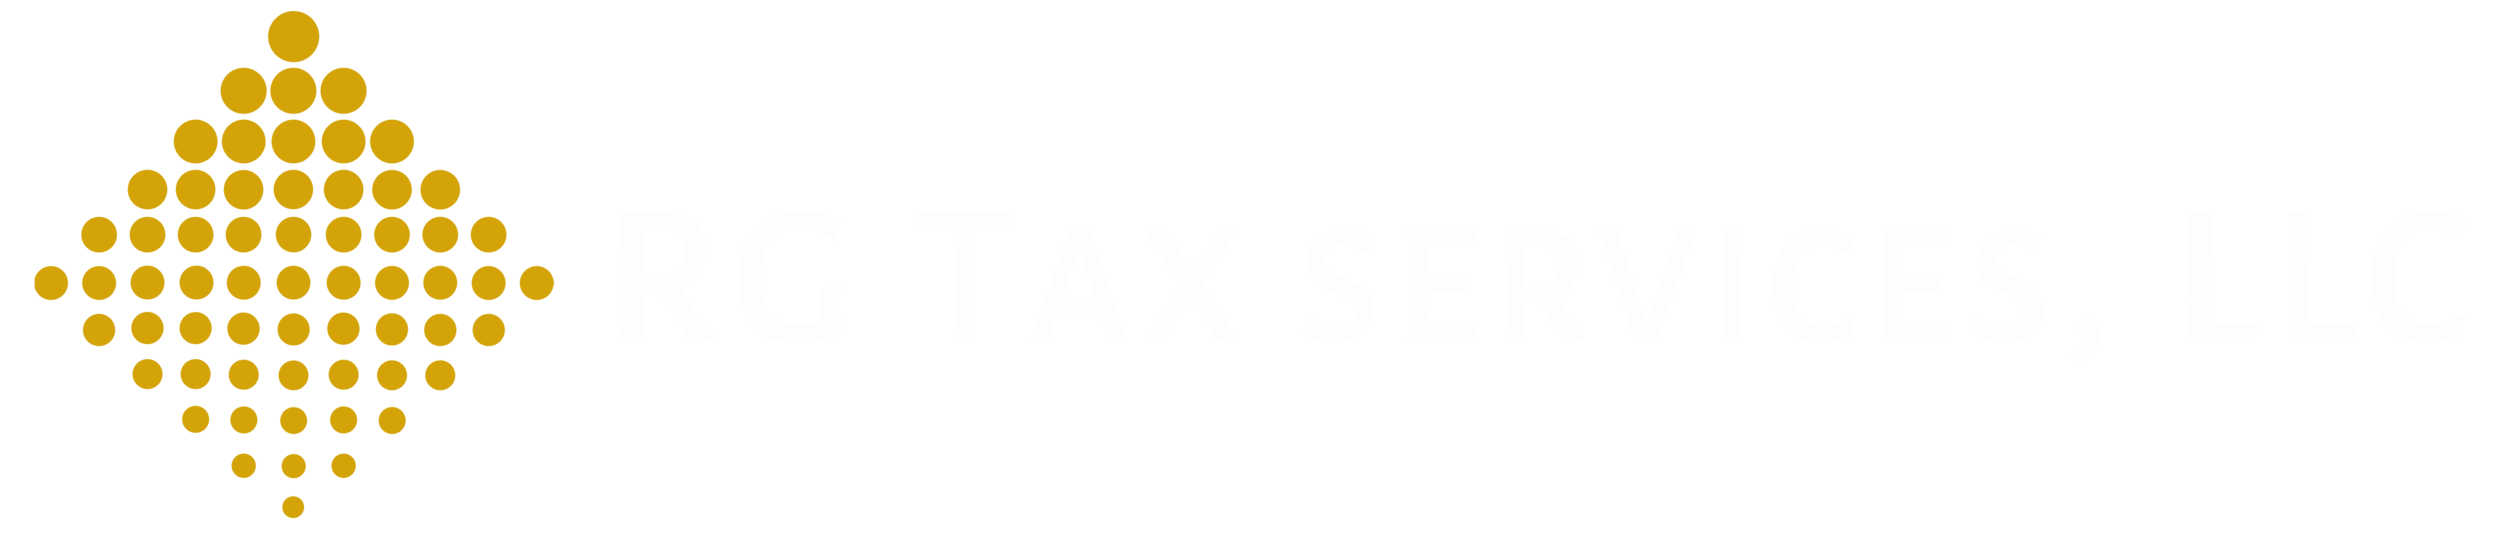 RG Tax Services, LLC